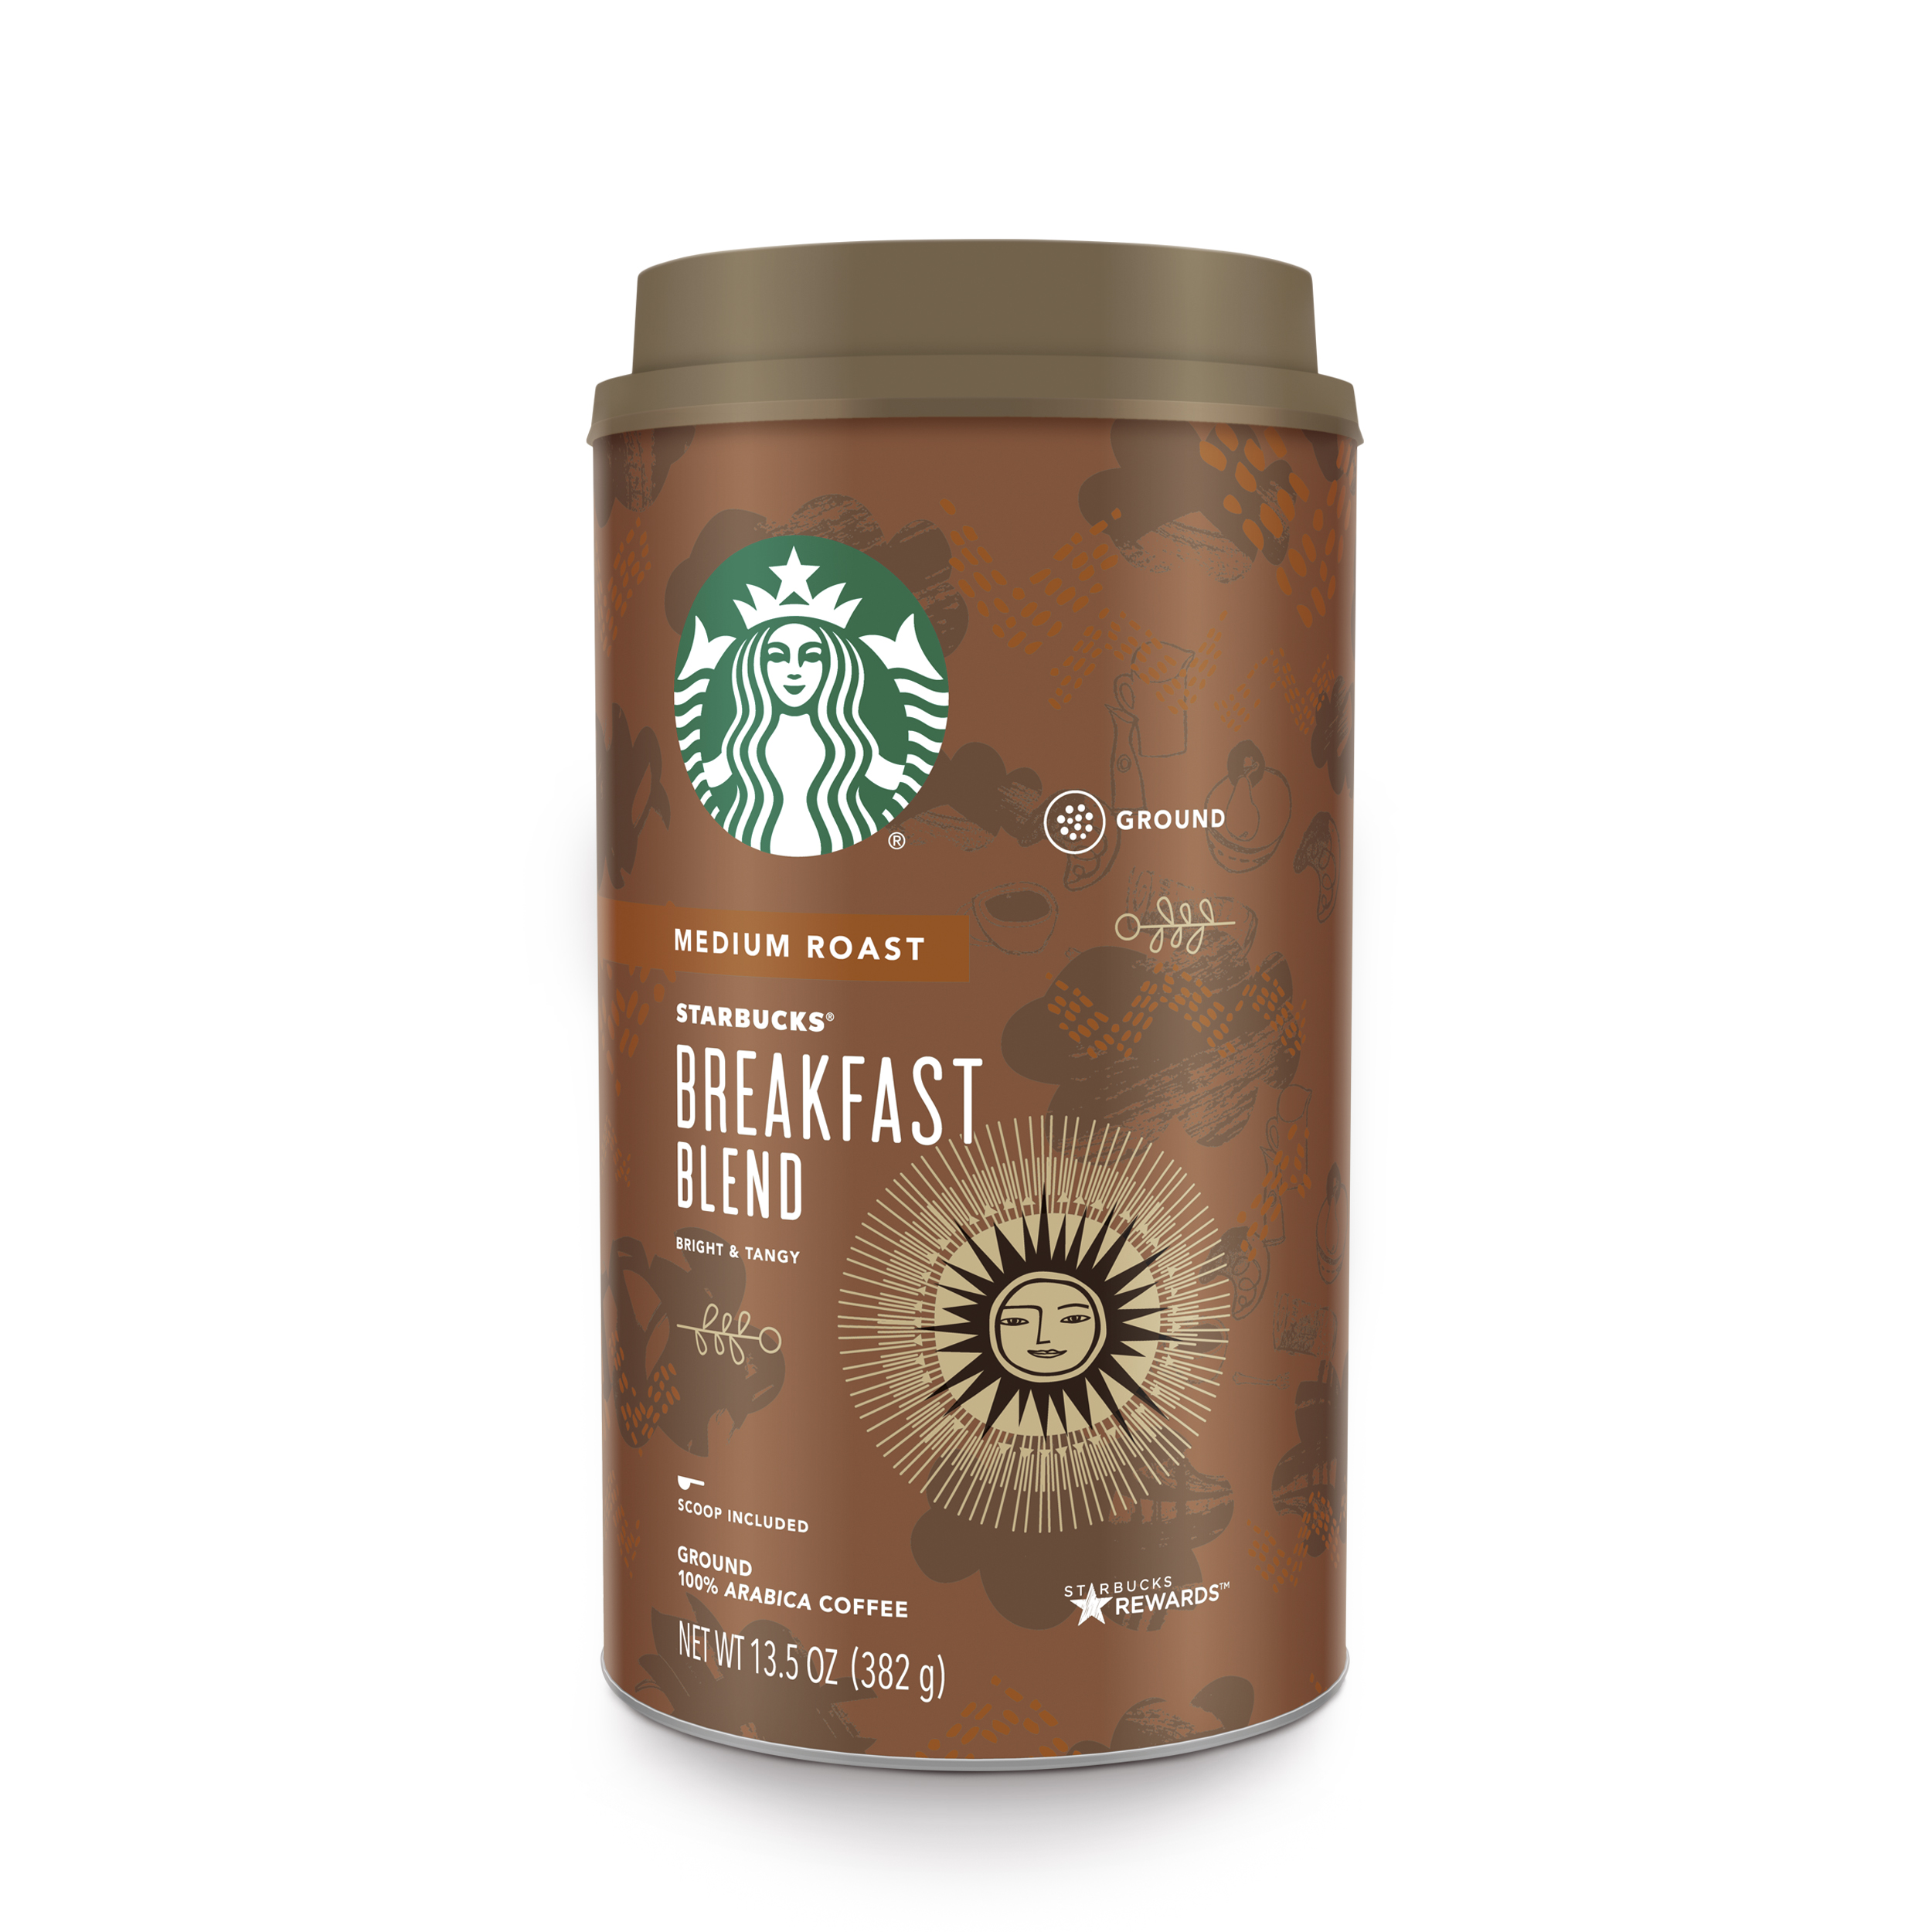 Starbucks Medium Roast Ground Coffee — Breakfast Blend — 100% Arabica — 1 canister (13.5 oz.) - image 1 of 7